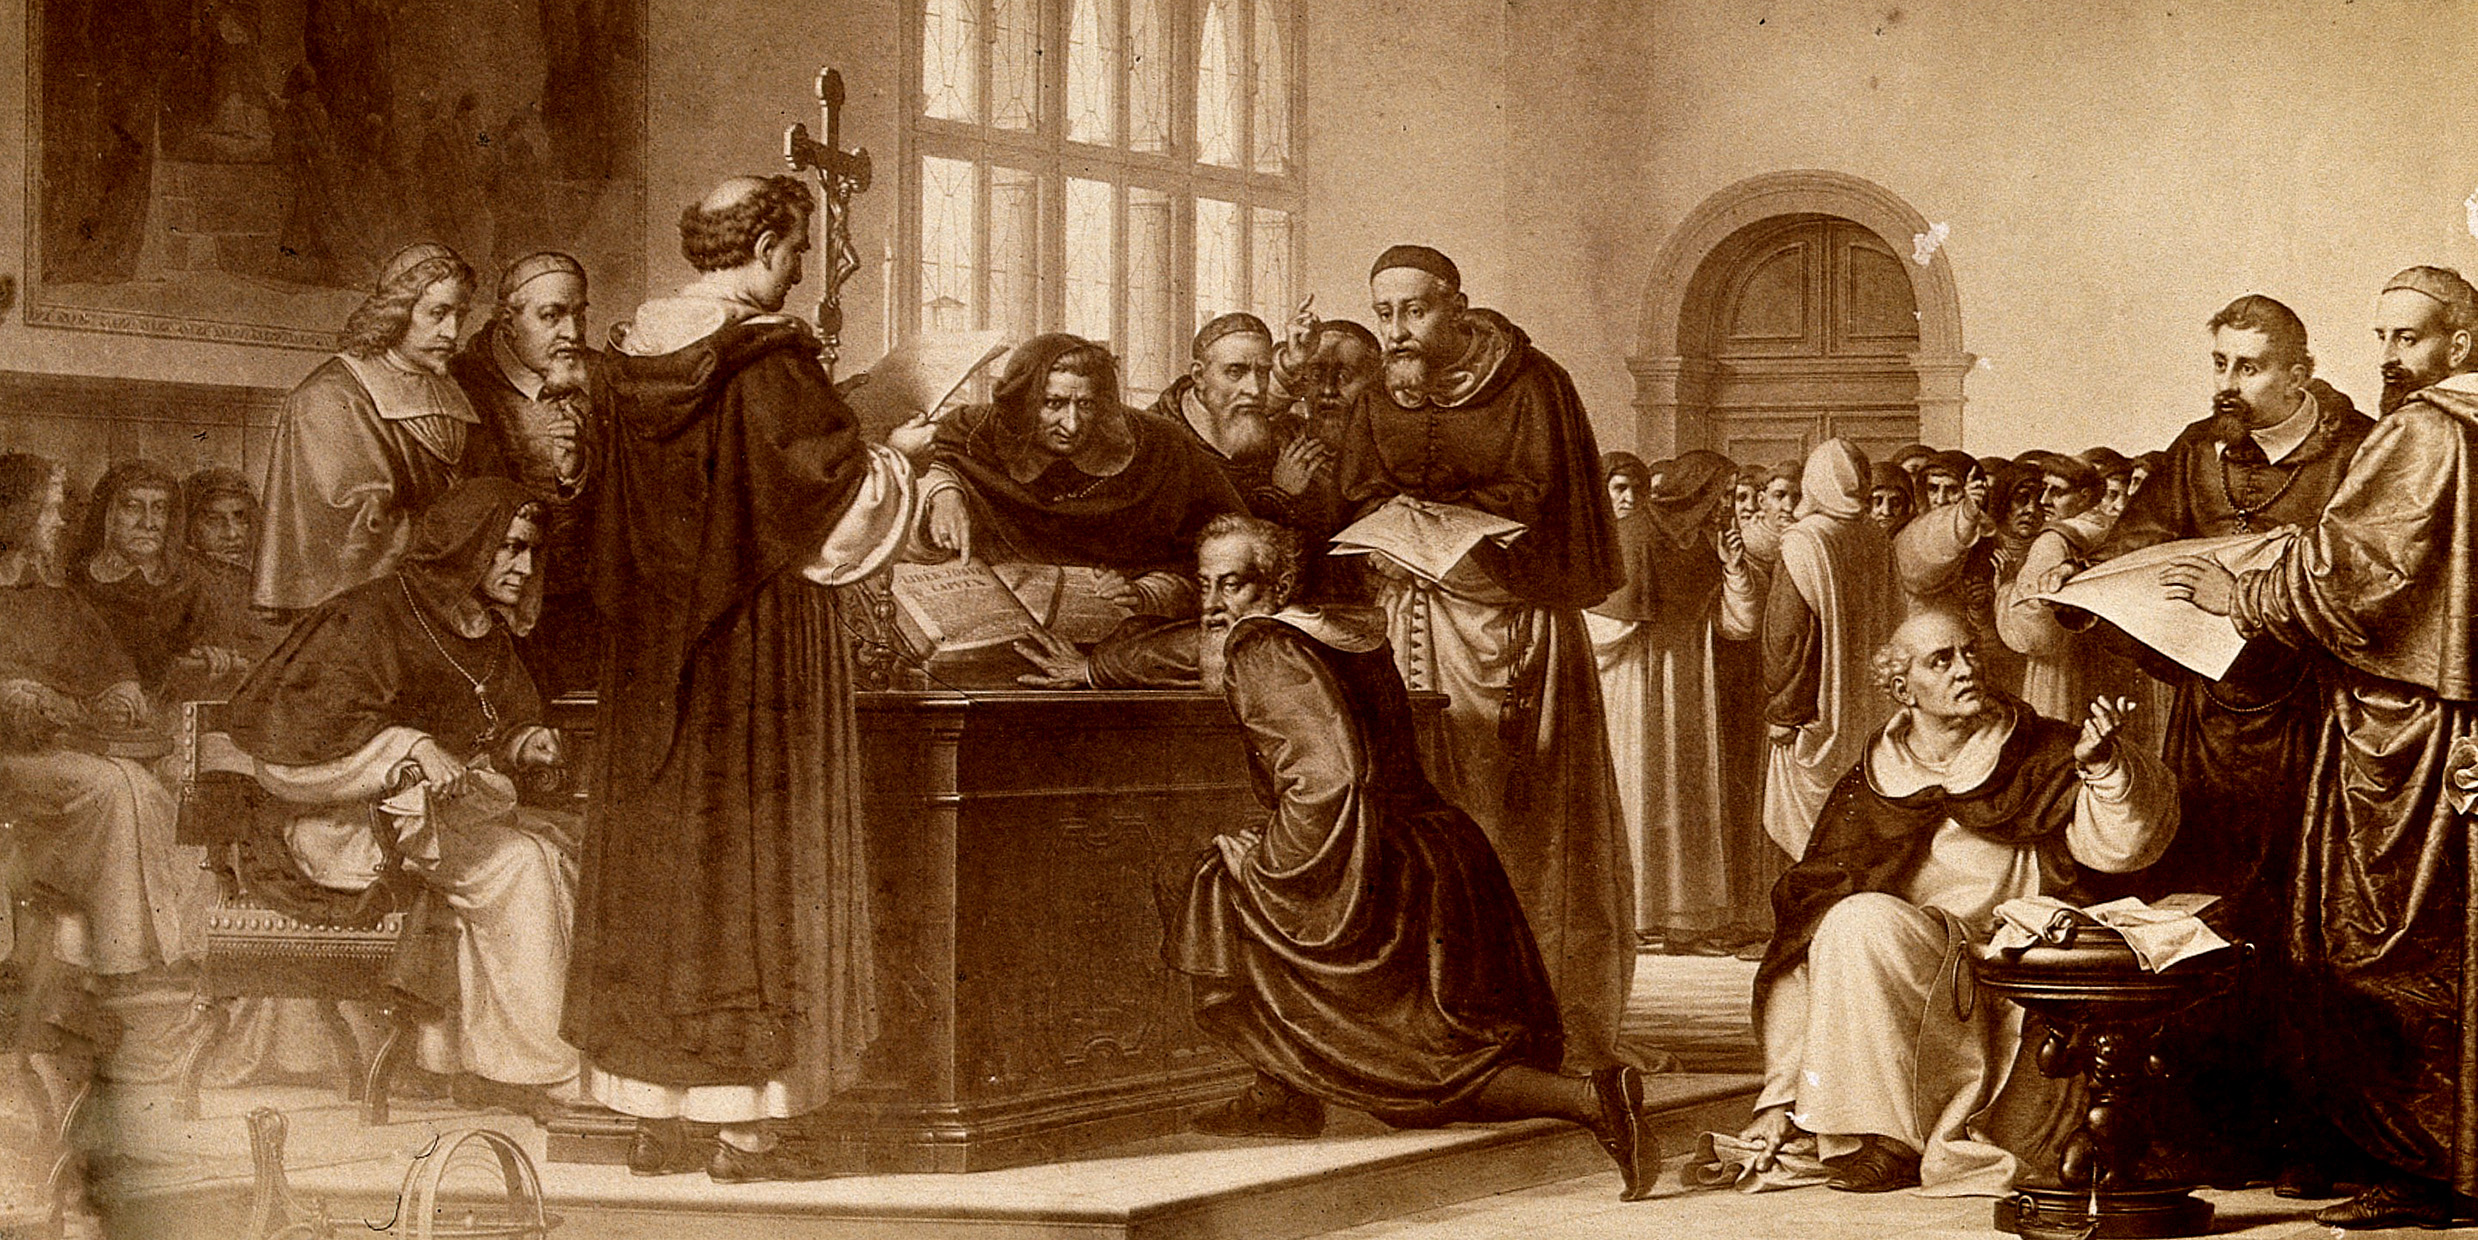 Illustration of Galileo kneeling at his trial